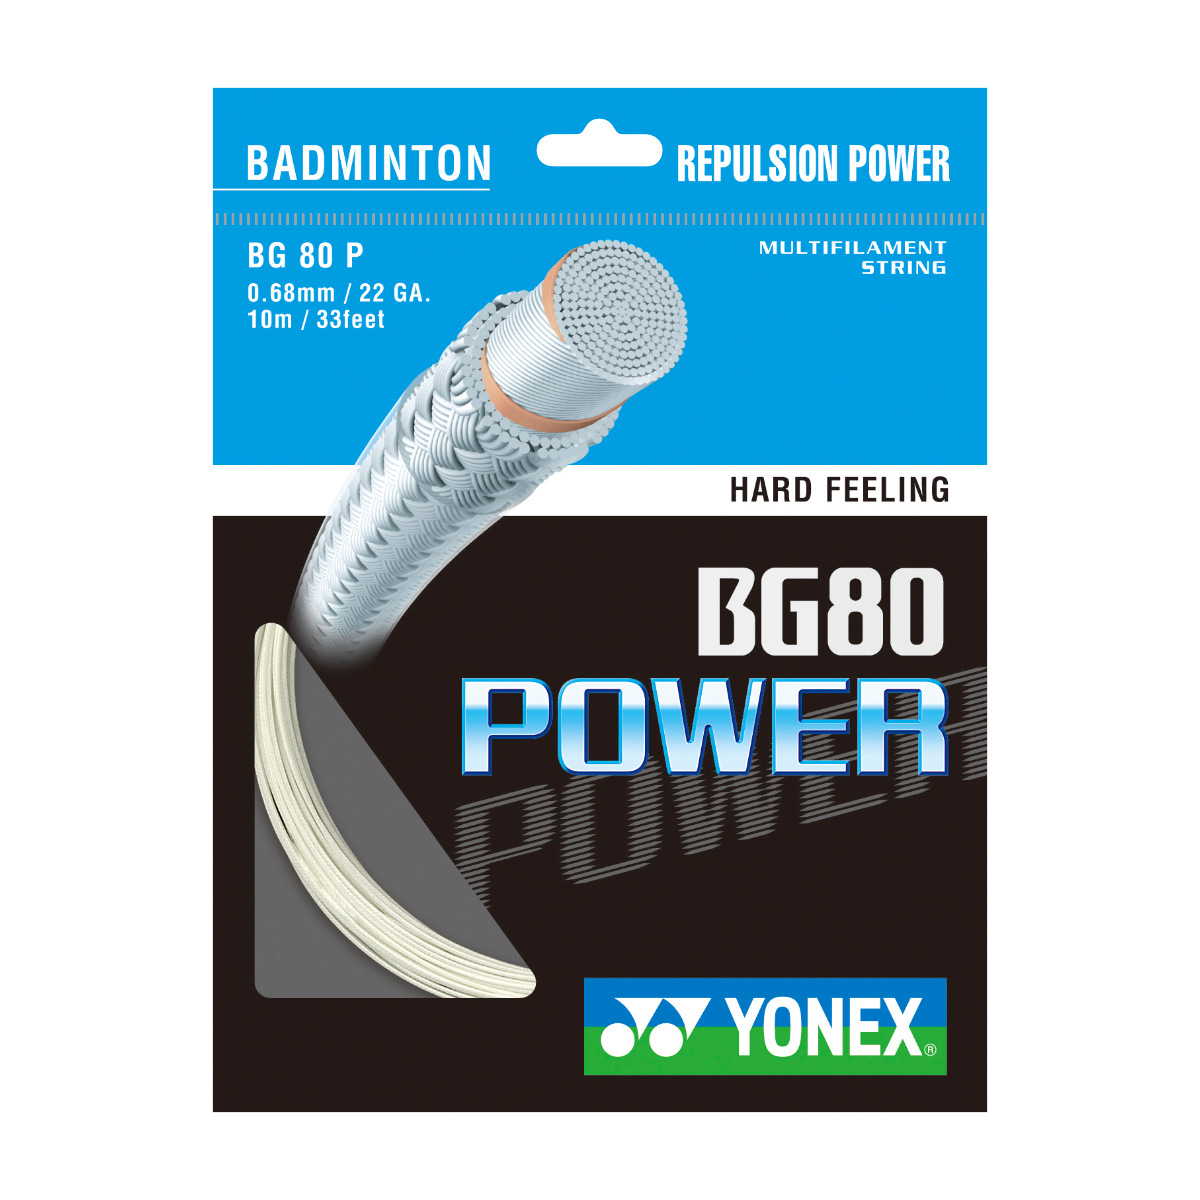 YONEX Badminton Saite - BG-80 POWER SETDetailbild - 1